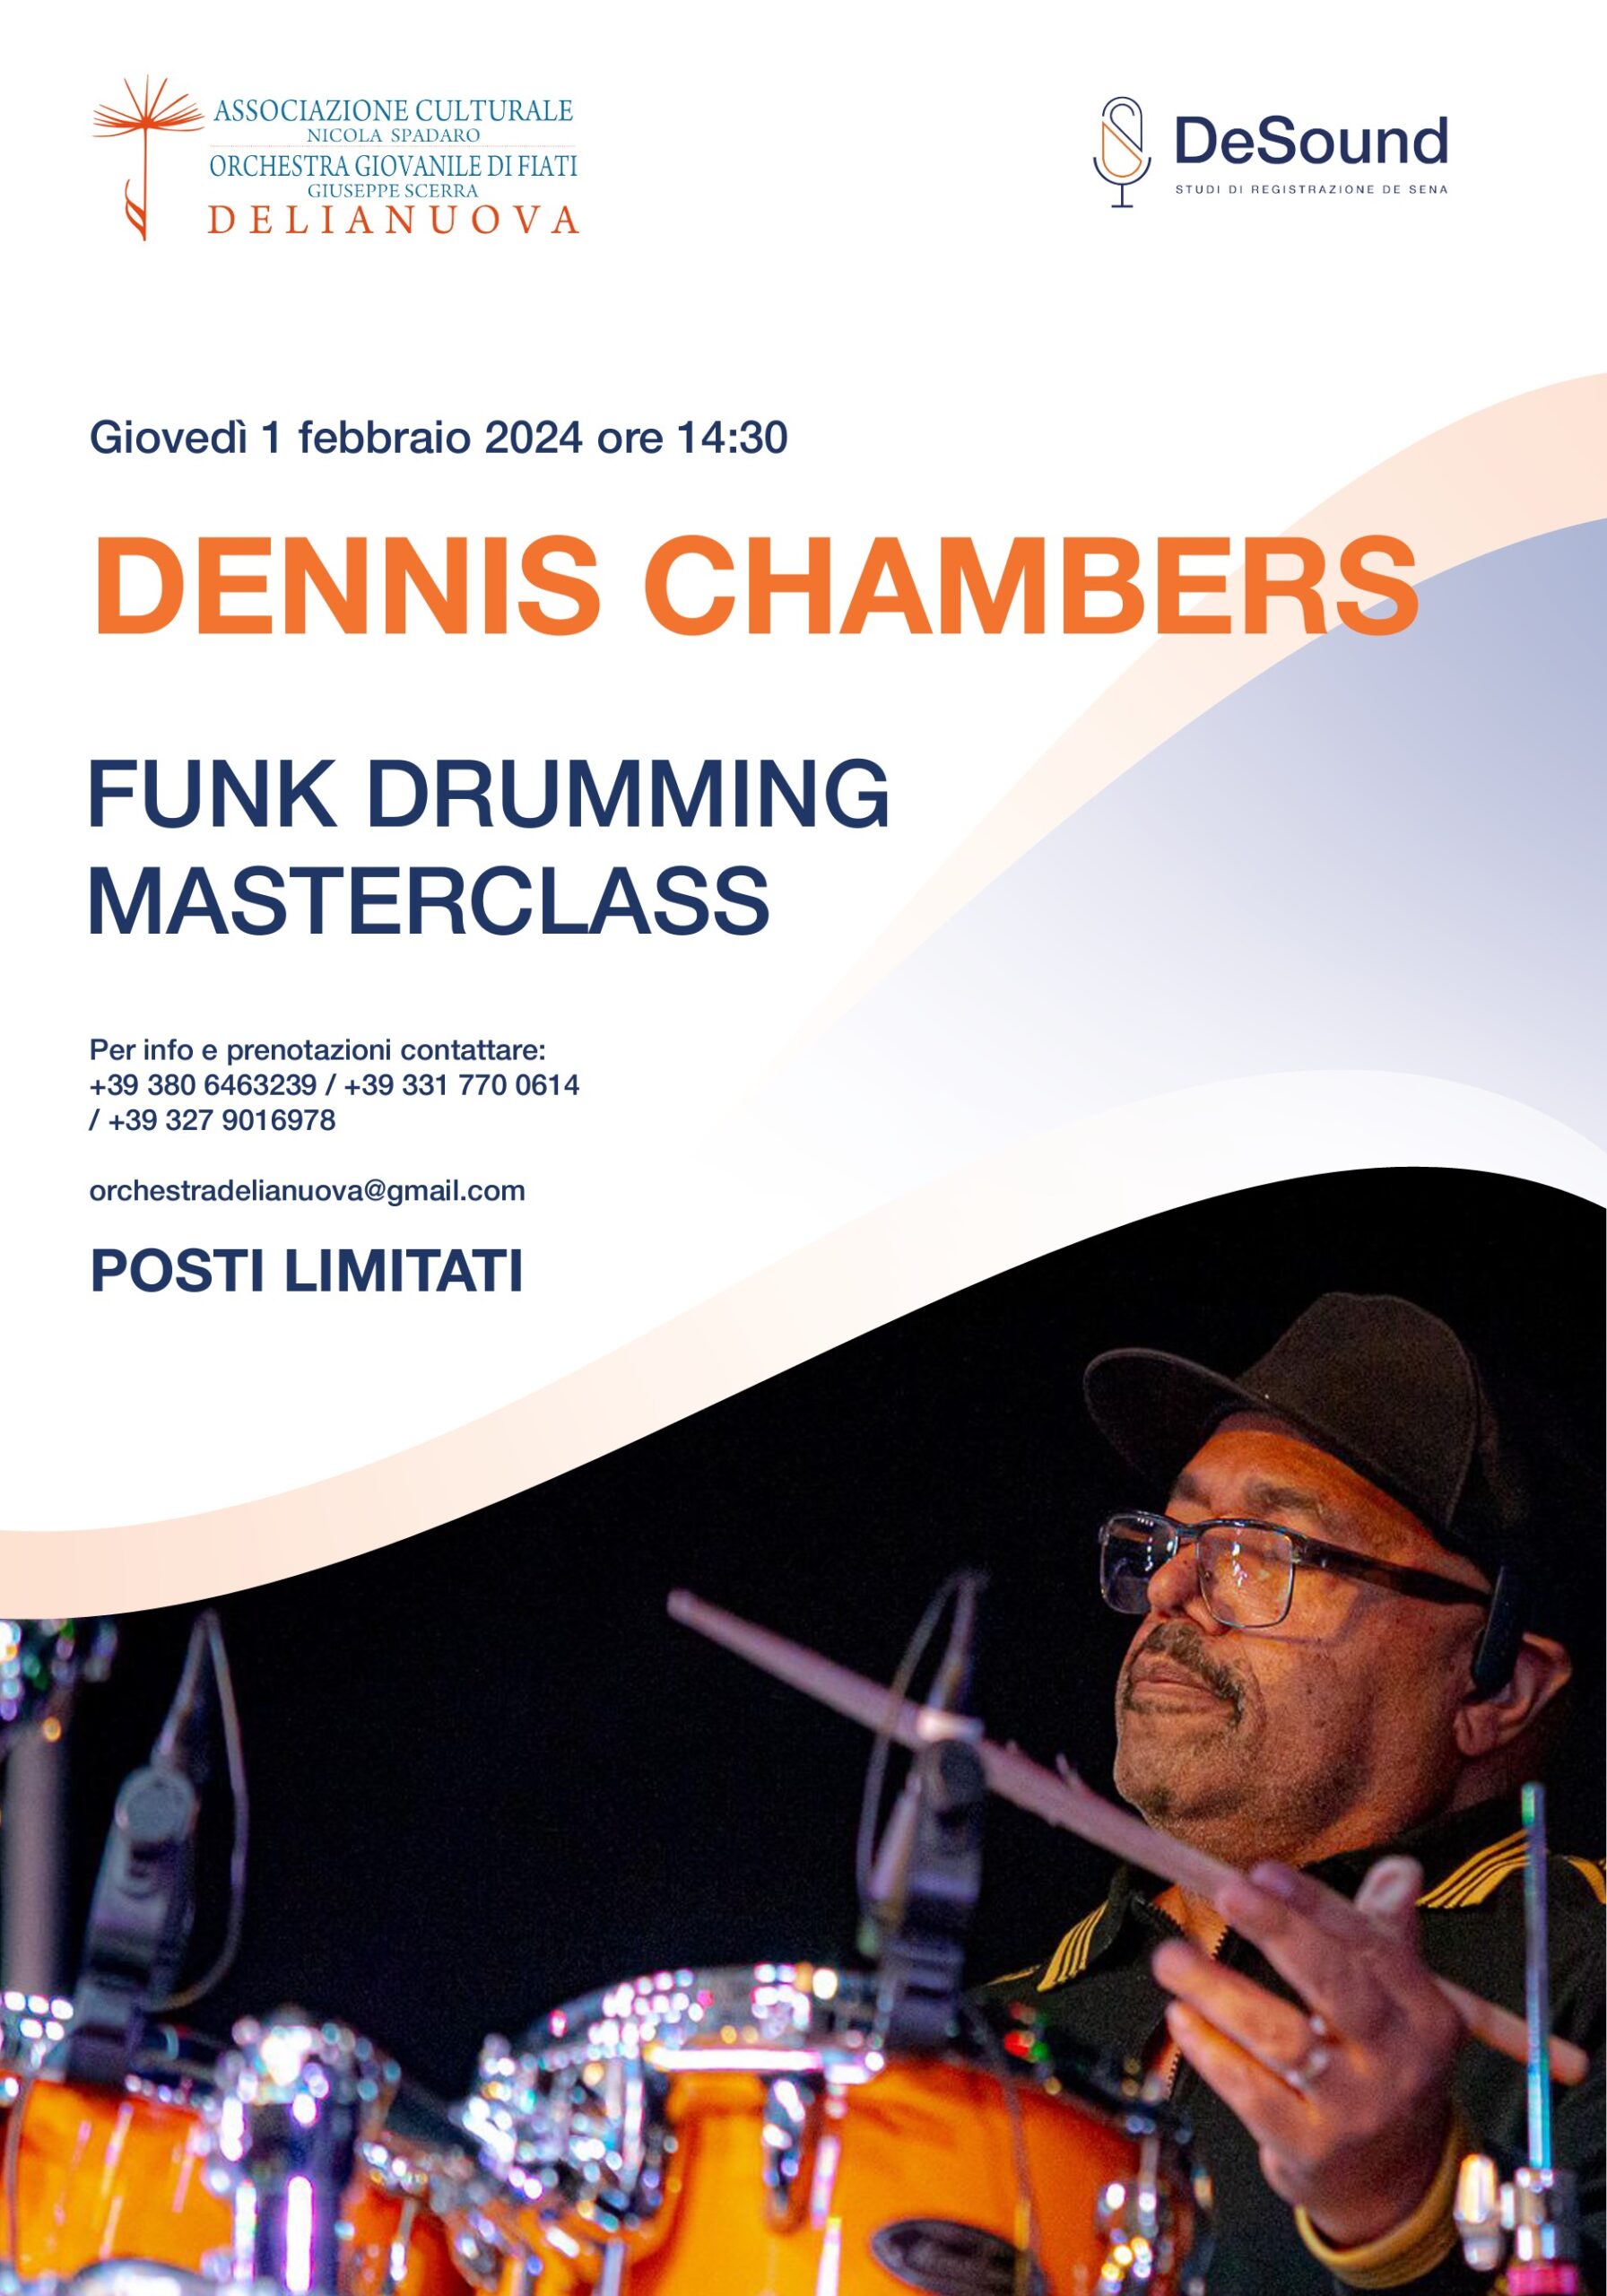 Masterclass funk drumming di Dennis Chambers